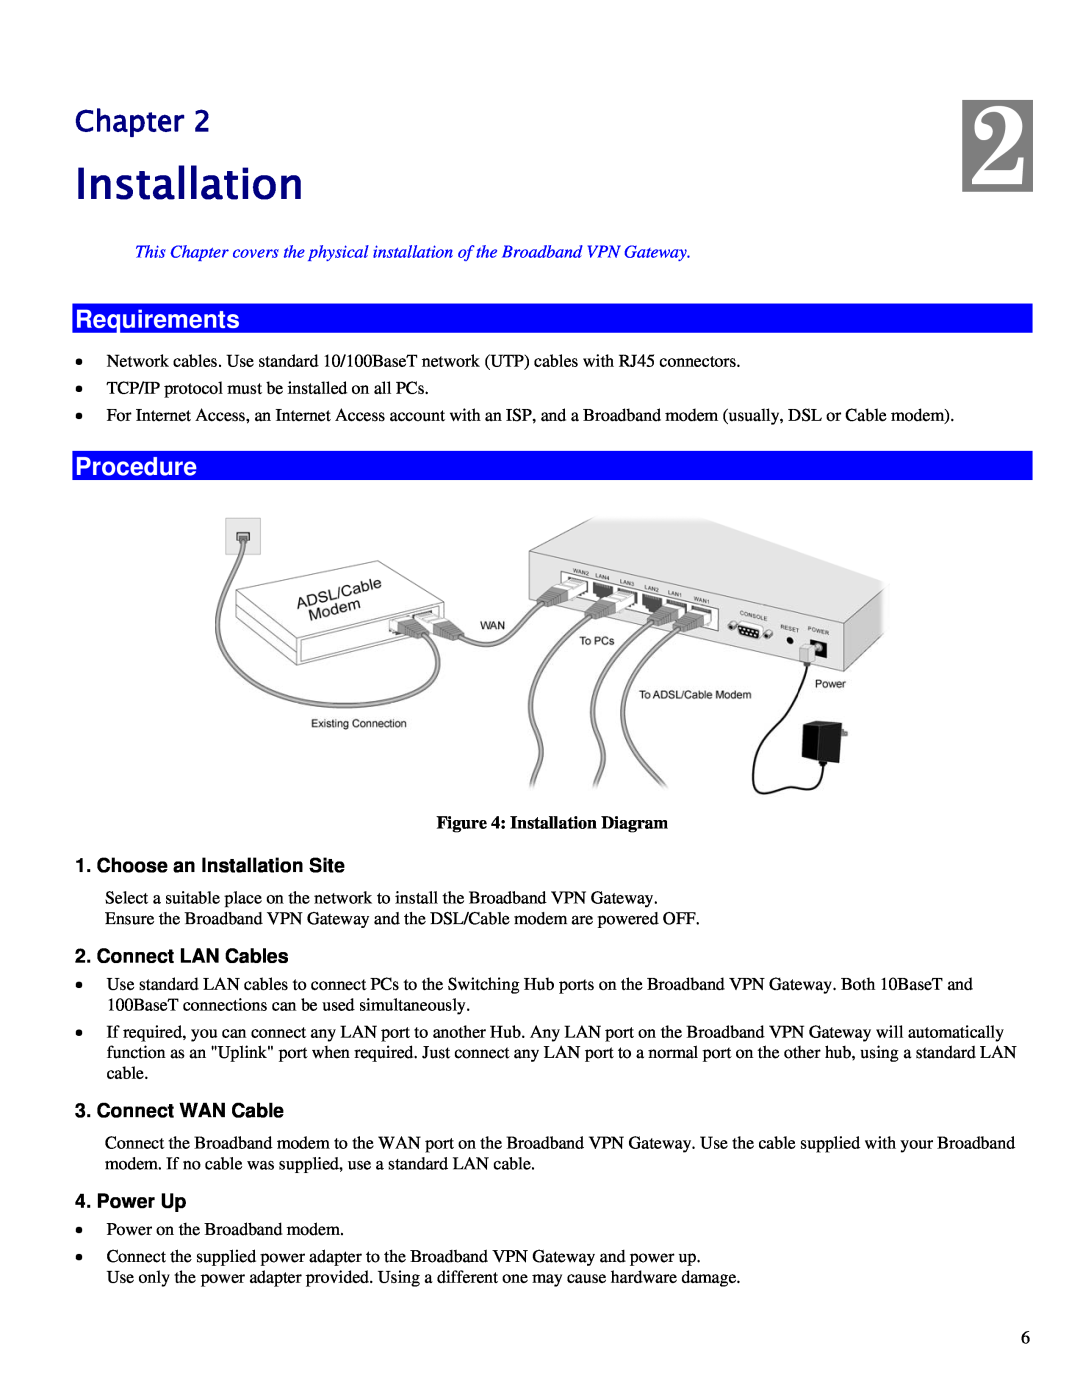 TRENDnet TW100-BRV324 manual Installation, Requirements, Procedure, Chapter 